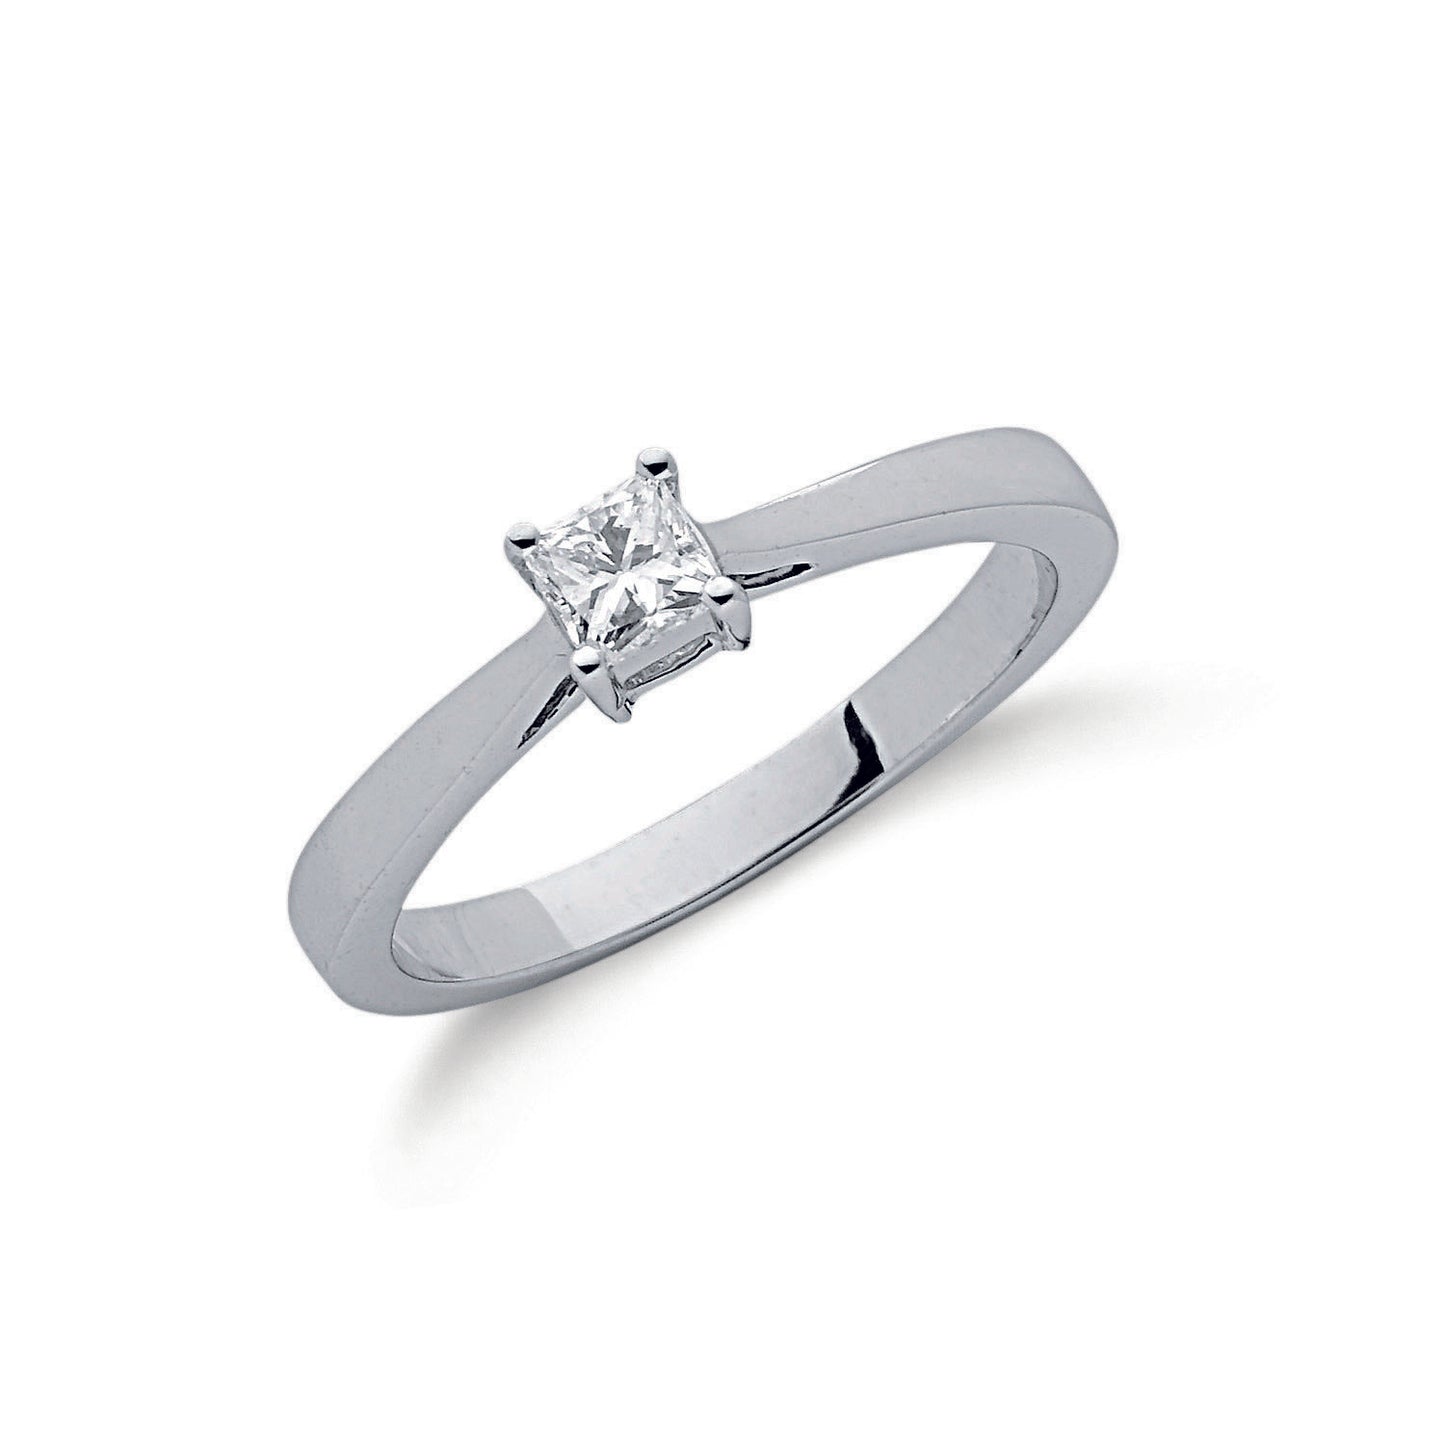 9ct White Gold 0.25ct Princess Cut Diamond Engagement Ring